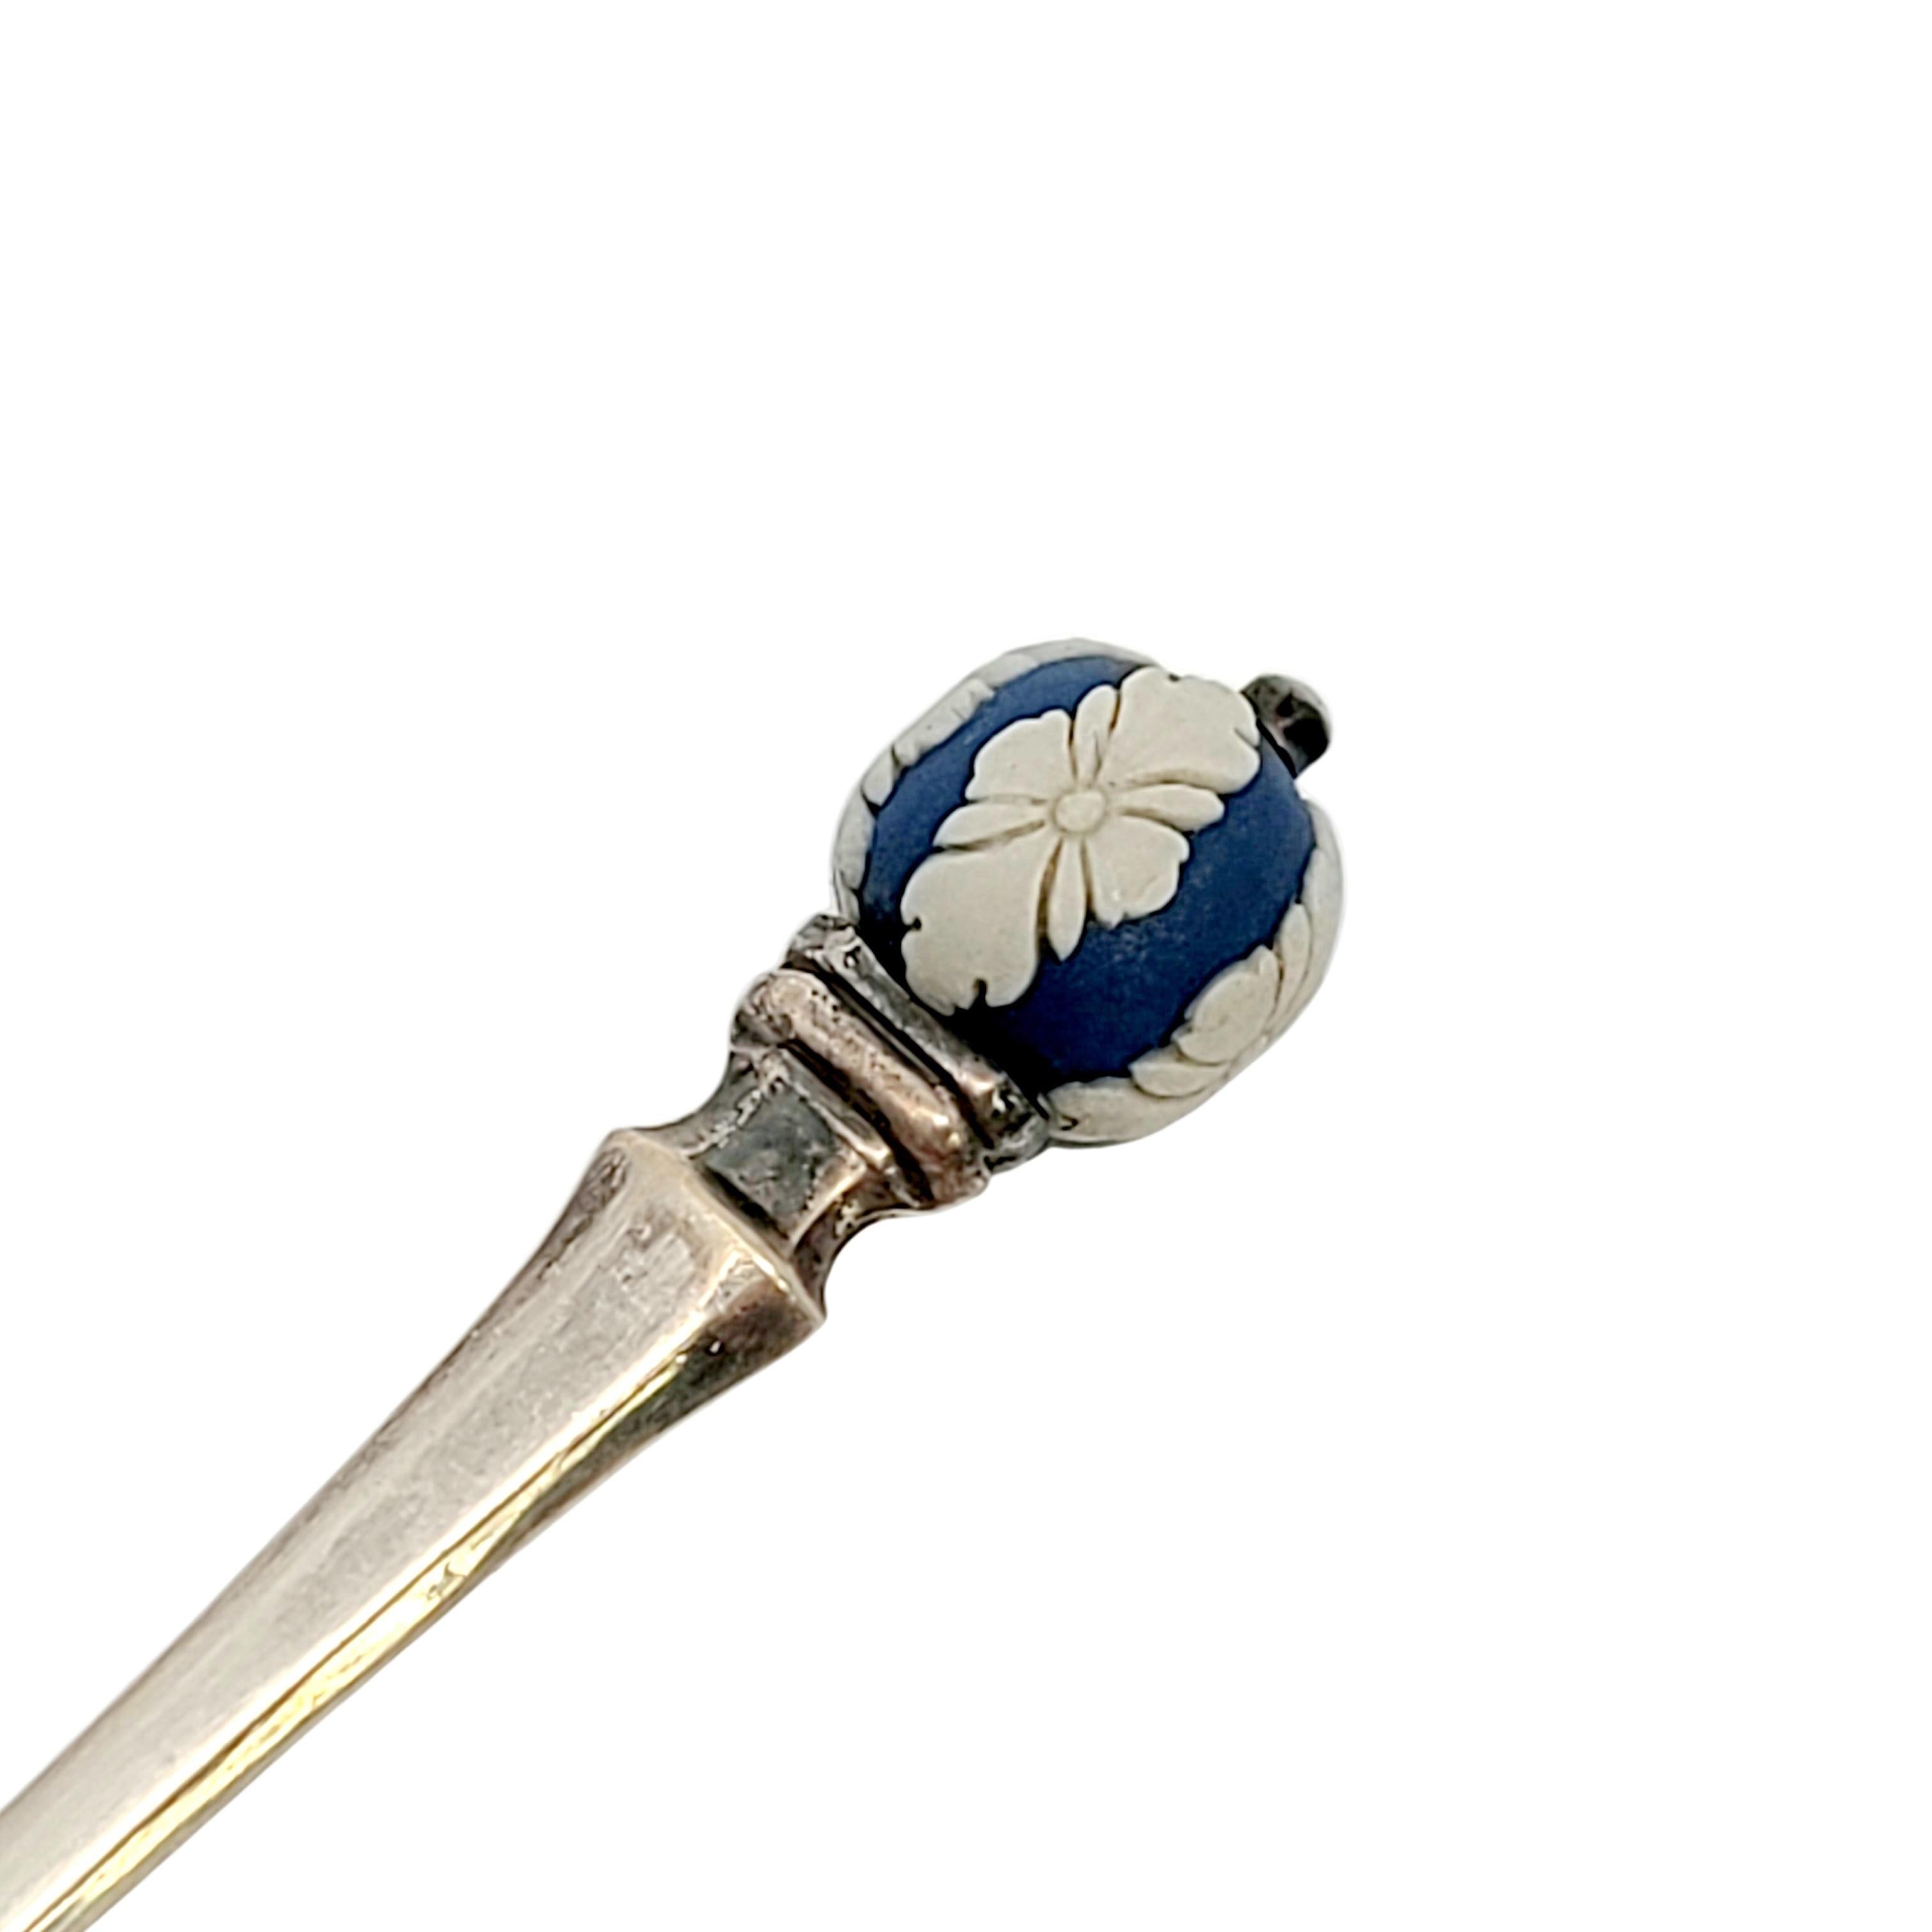 Wedgwood Sterling Silver Blue Jasperware Spoon with Box 4